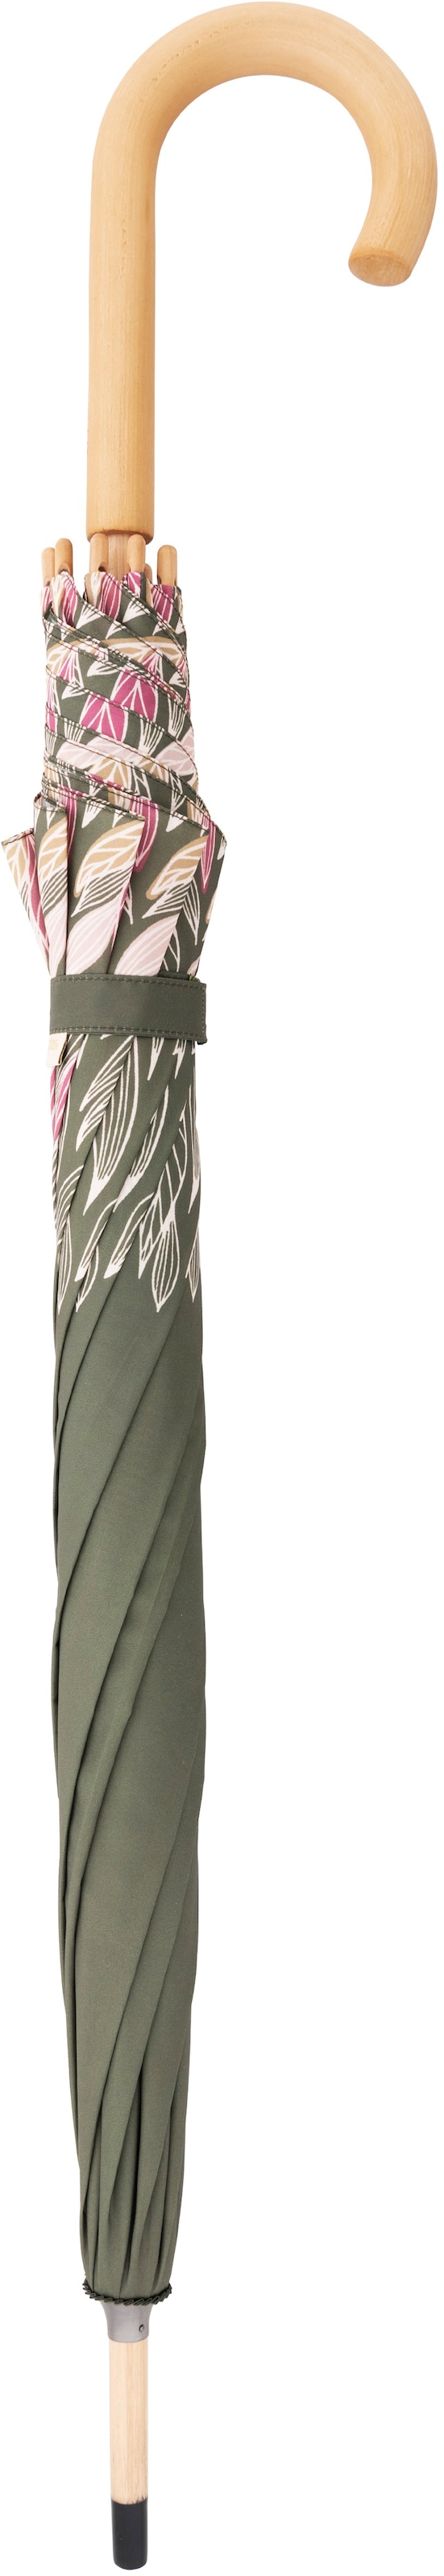 doppler® Stockregenschirm »nature Long, intention olive«, aus recyceltem  Material mit Schirmgriff aus Holz kaufen | Stockschirme